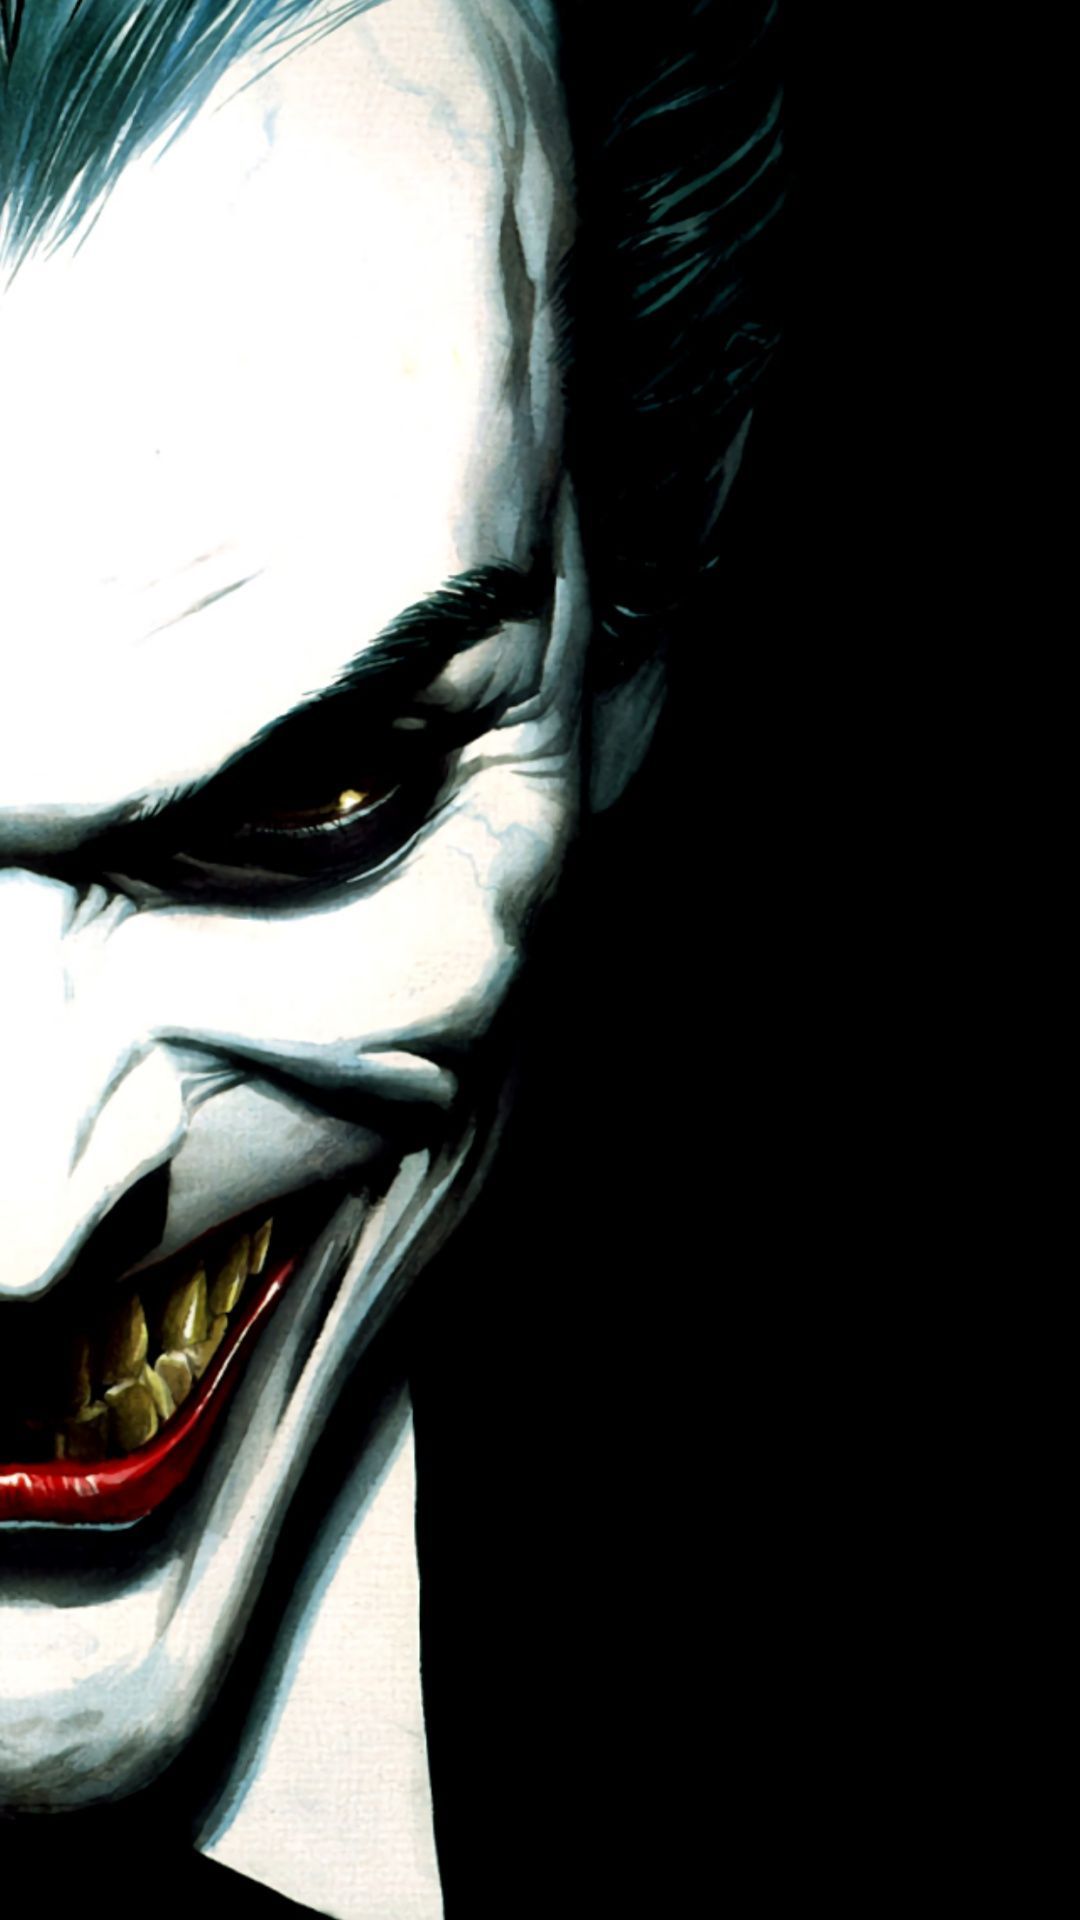 Amoled Wallpaper 60. Joker wallpaper, Superhero image, Superhero background